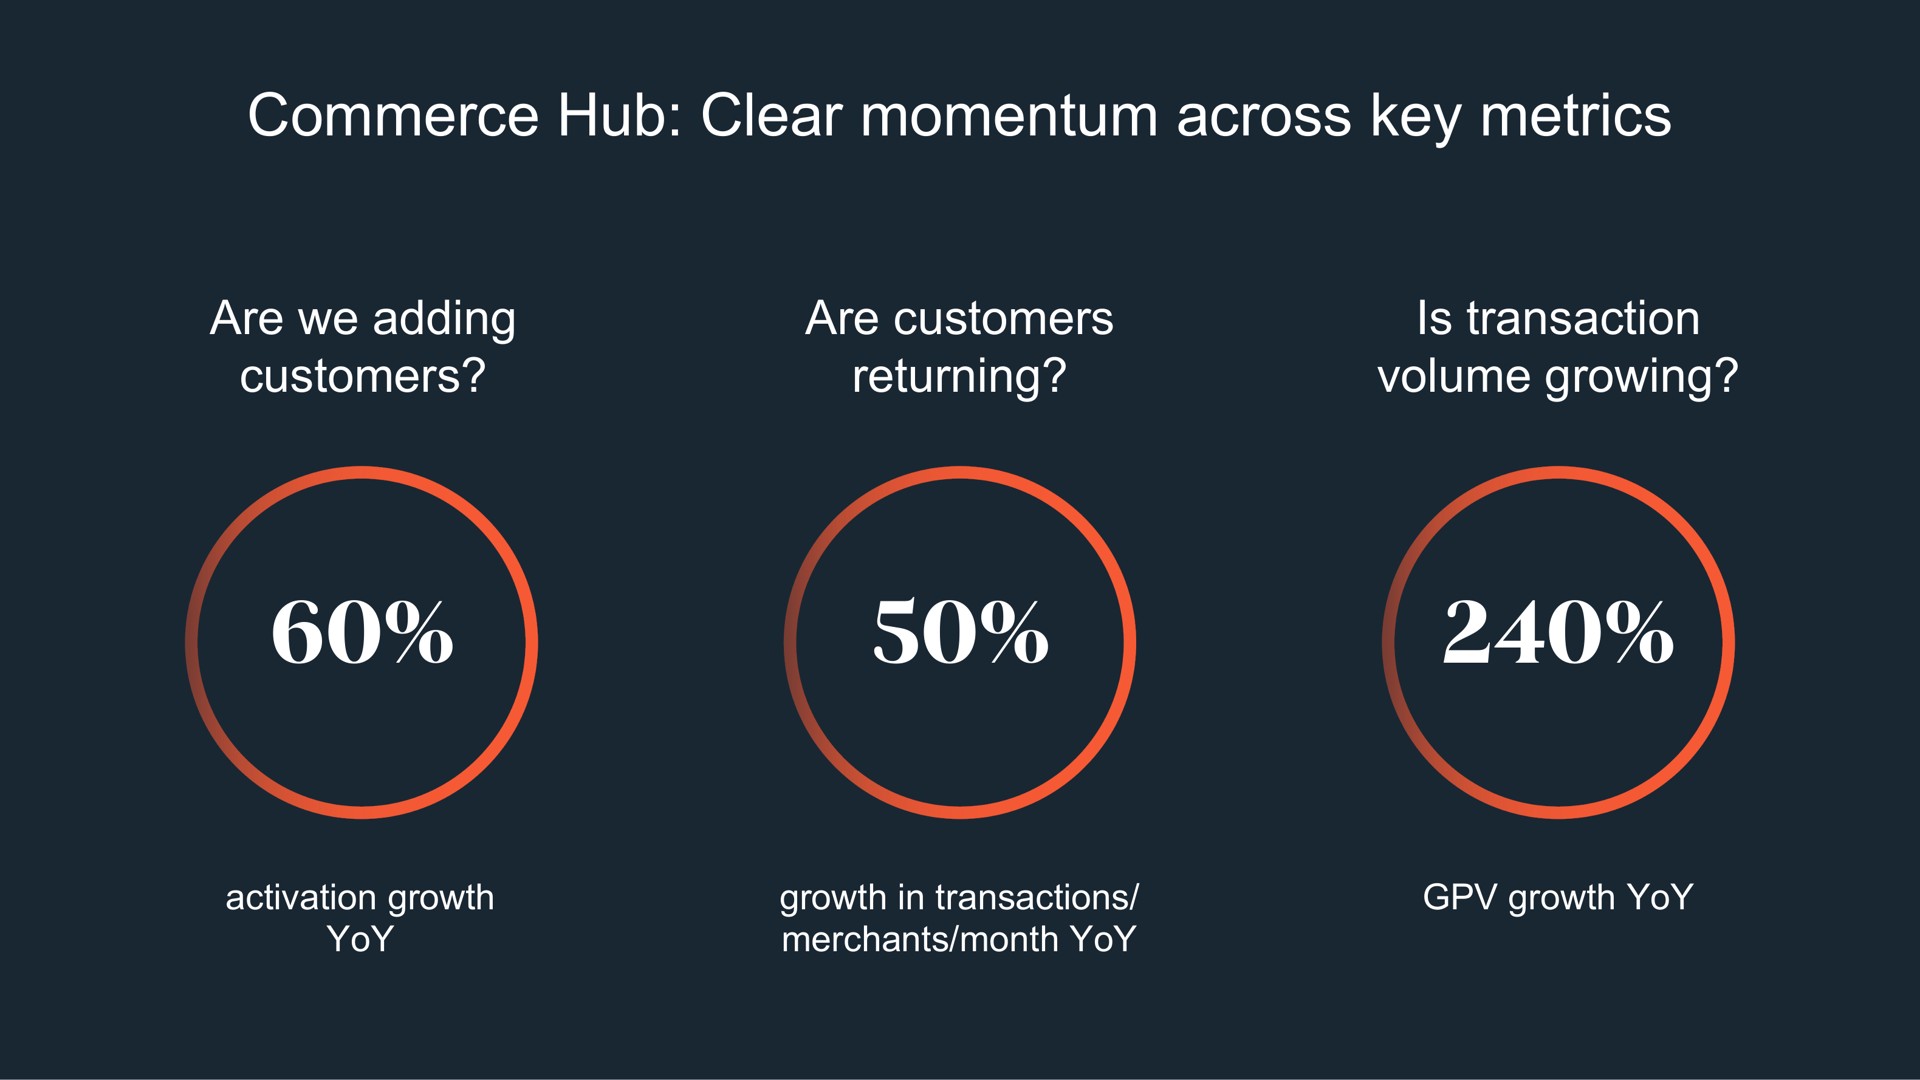 commerce hub clear momentum across key metrics | Hubspot